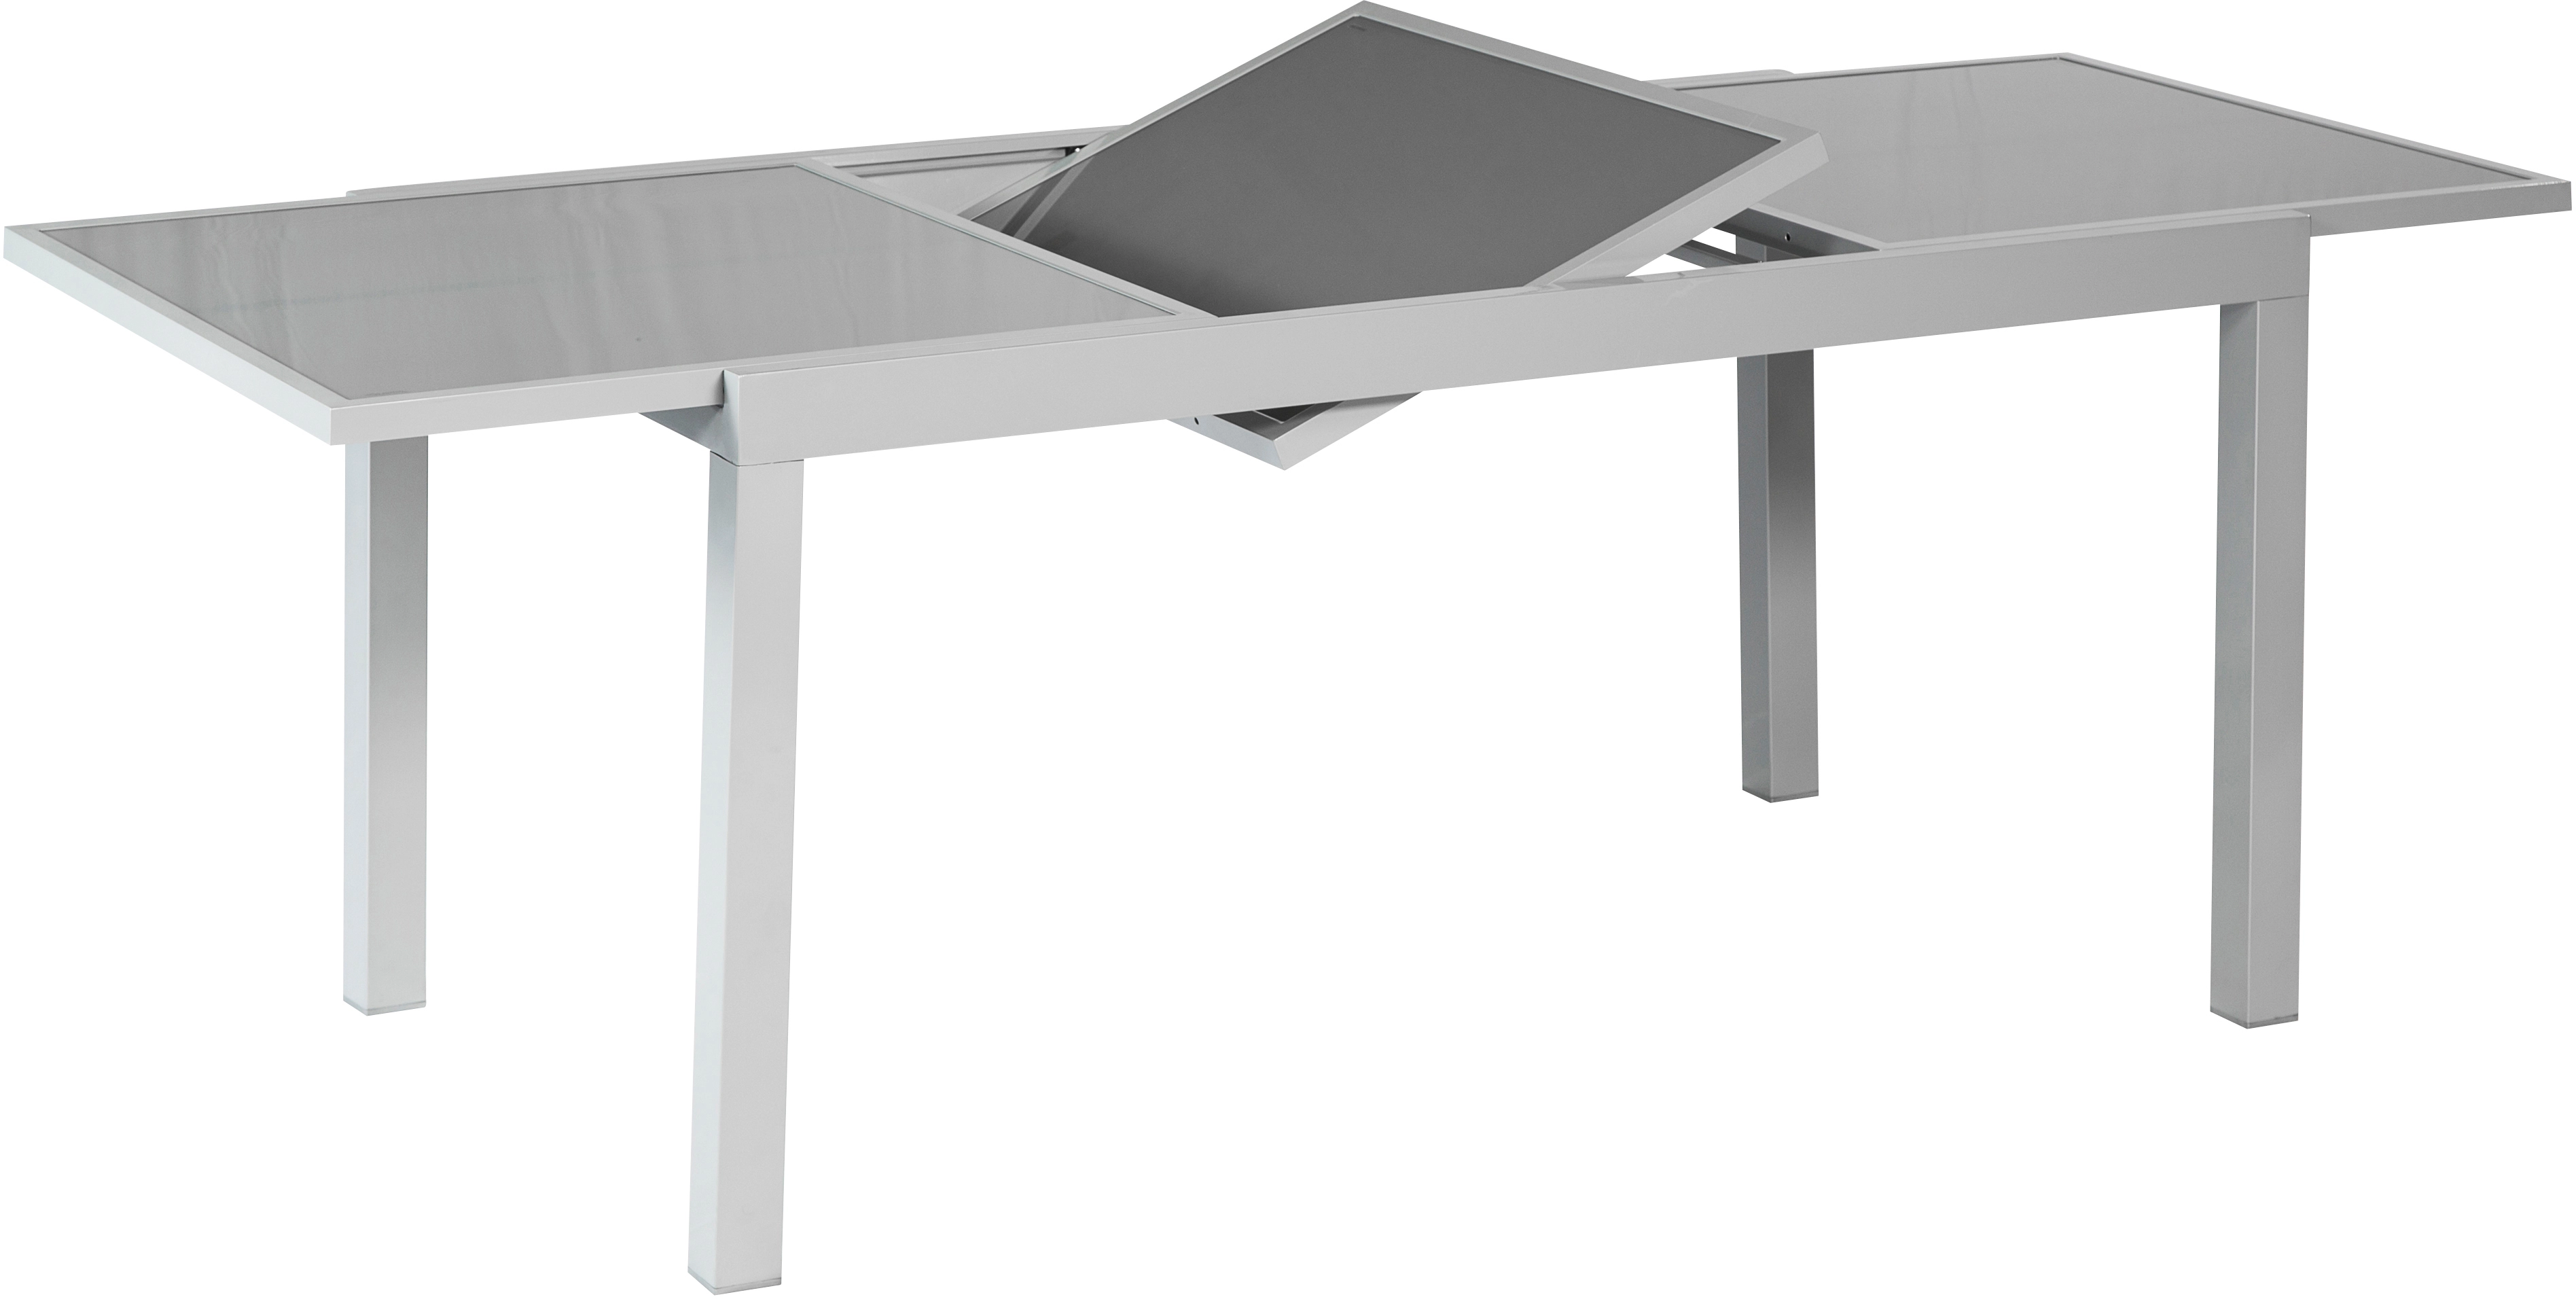 Merxx Gartentisch Rechteckig Aluminium Grau Ausziehbar 120/180 cm x 90 cm